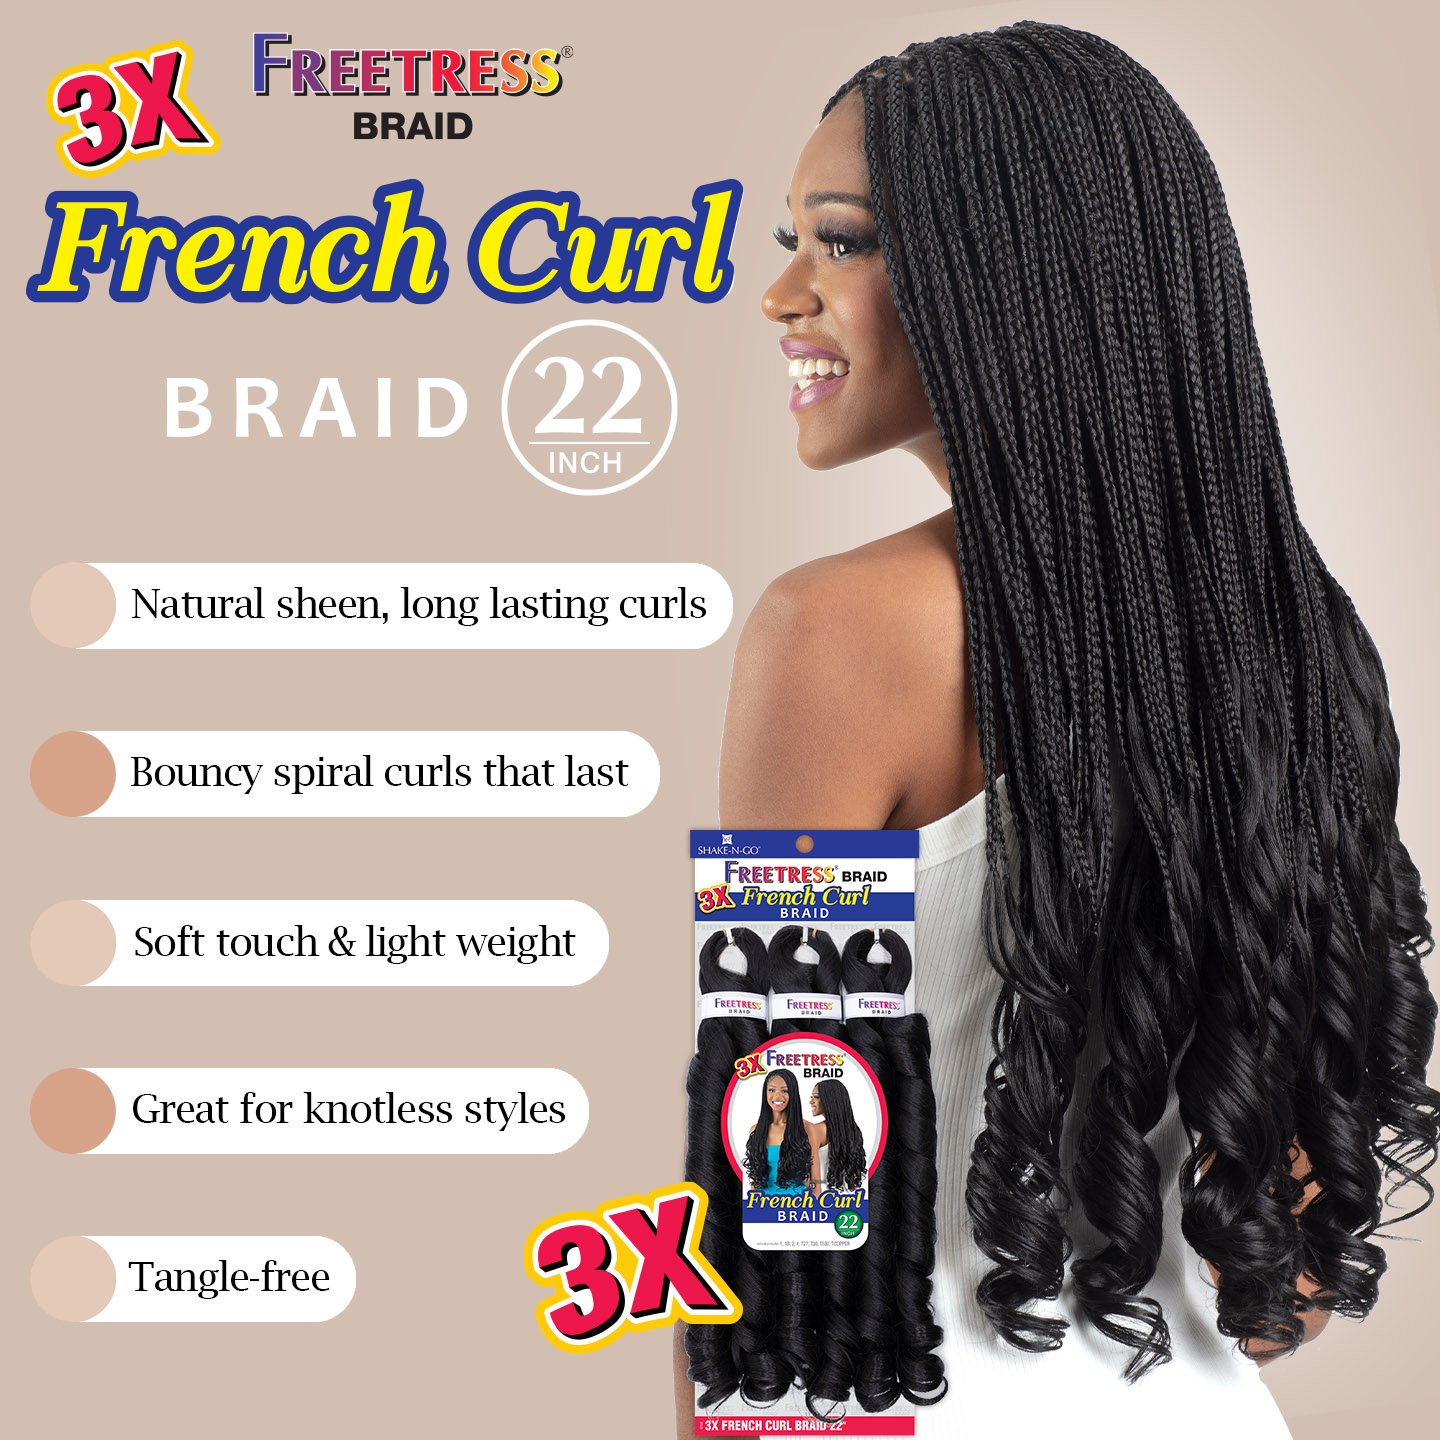 Freetress crochet hair - 3X FRENCH CURL BRAID 22